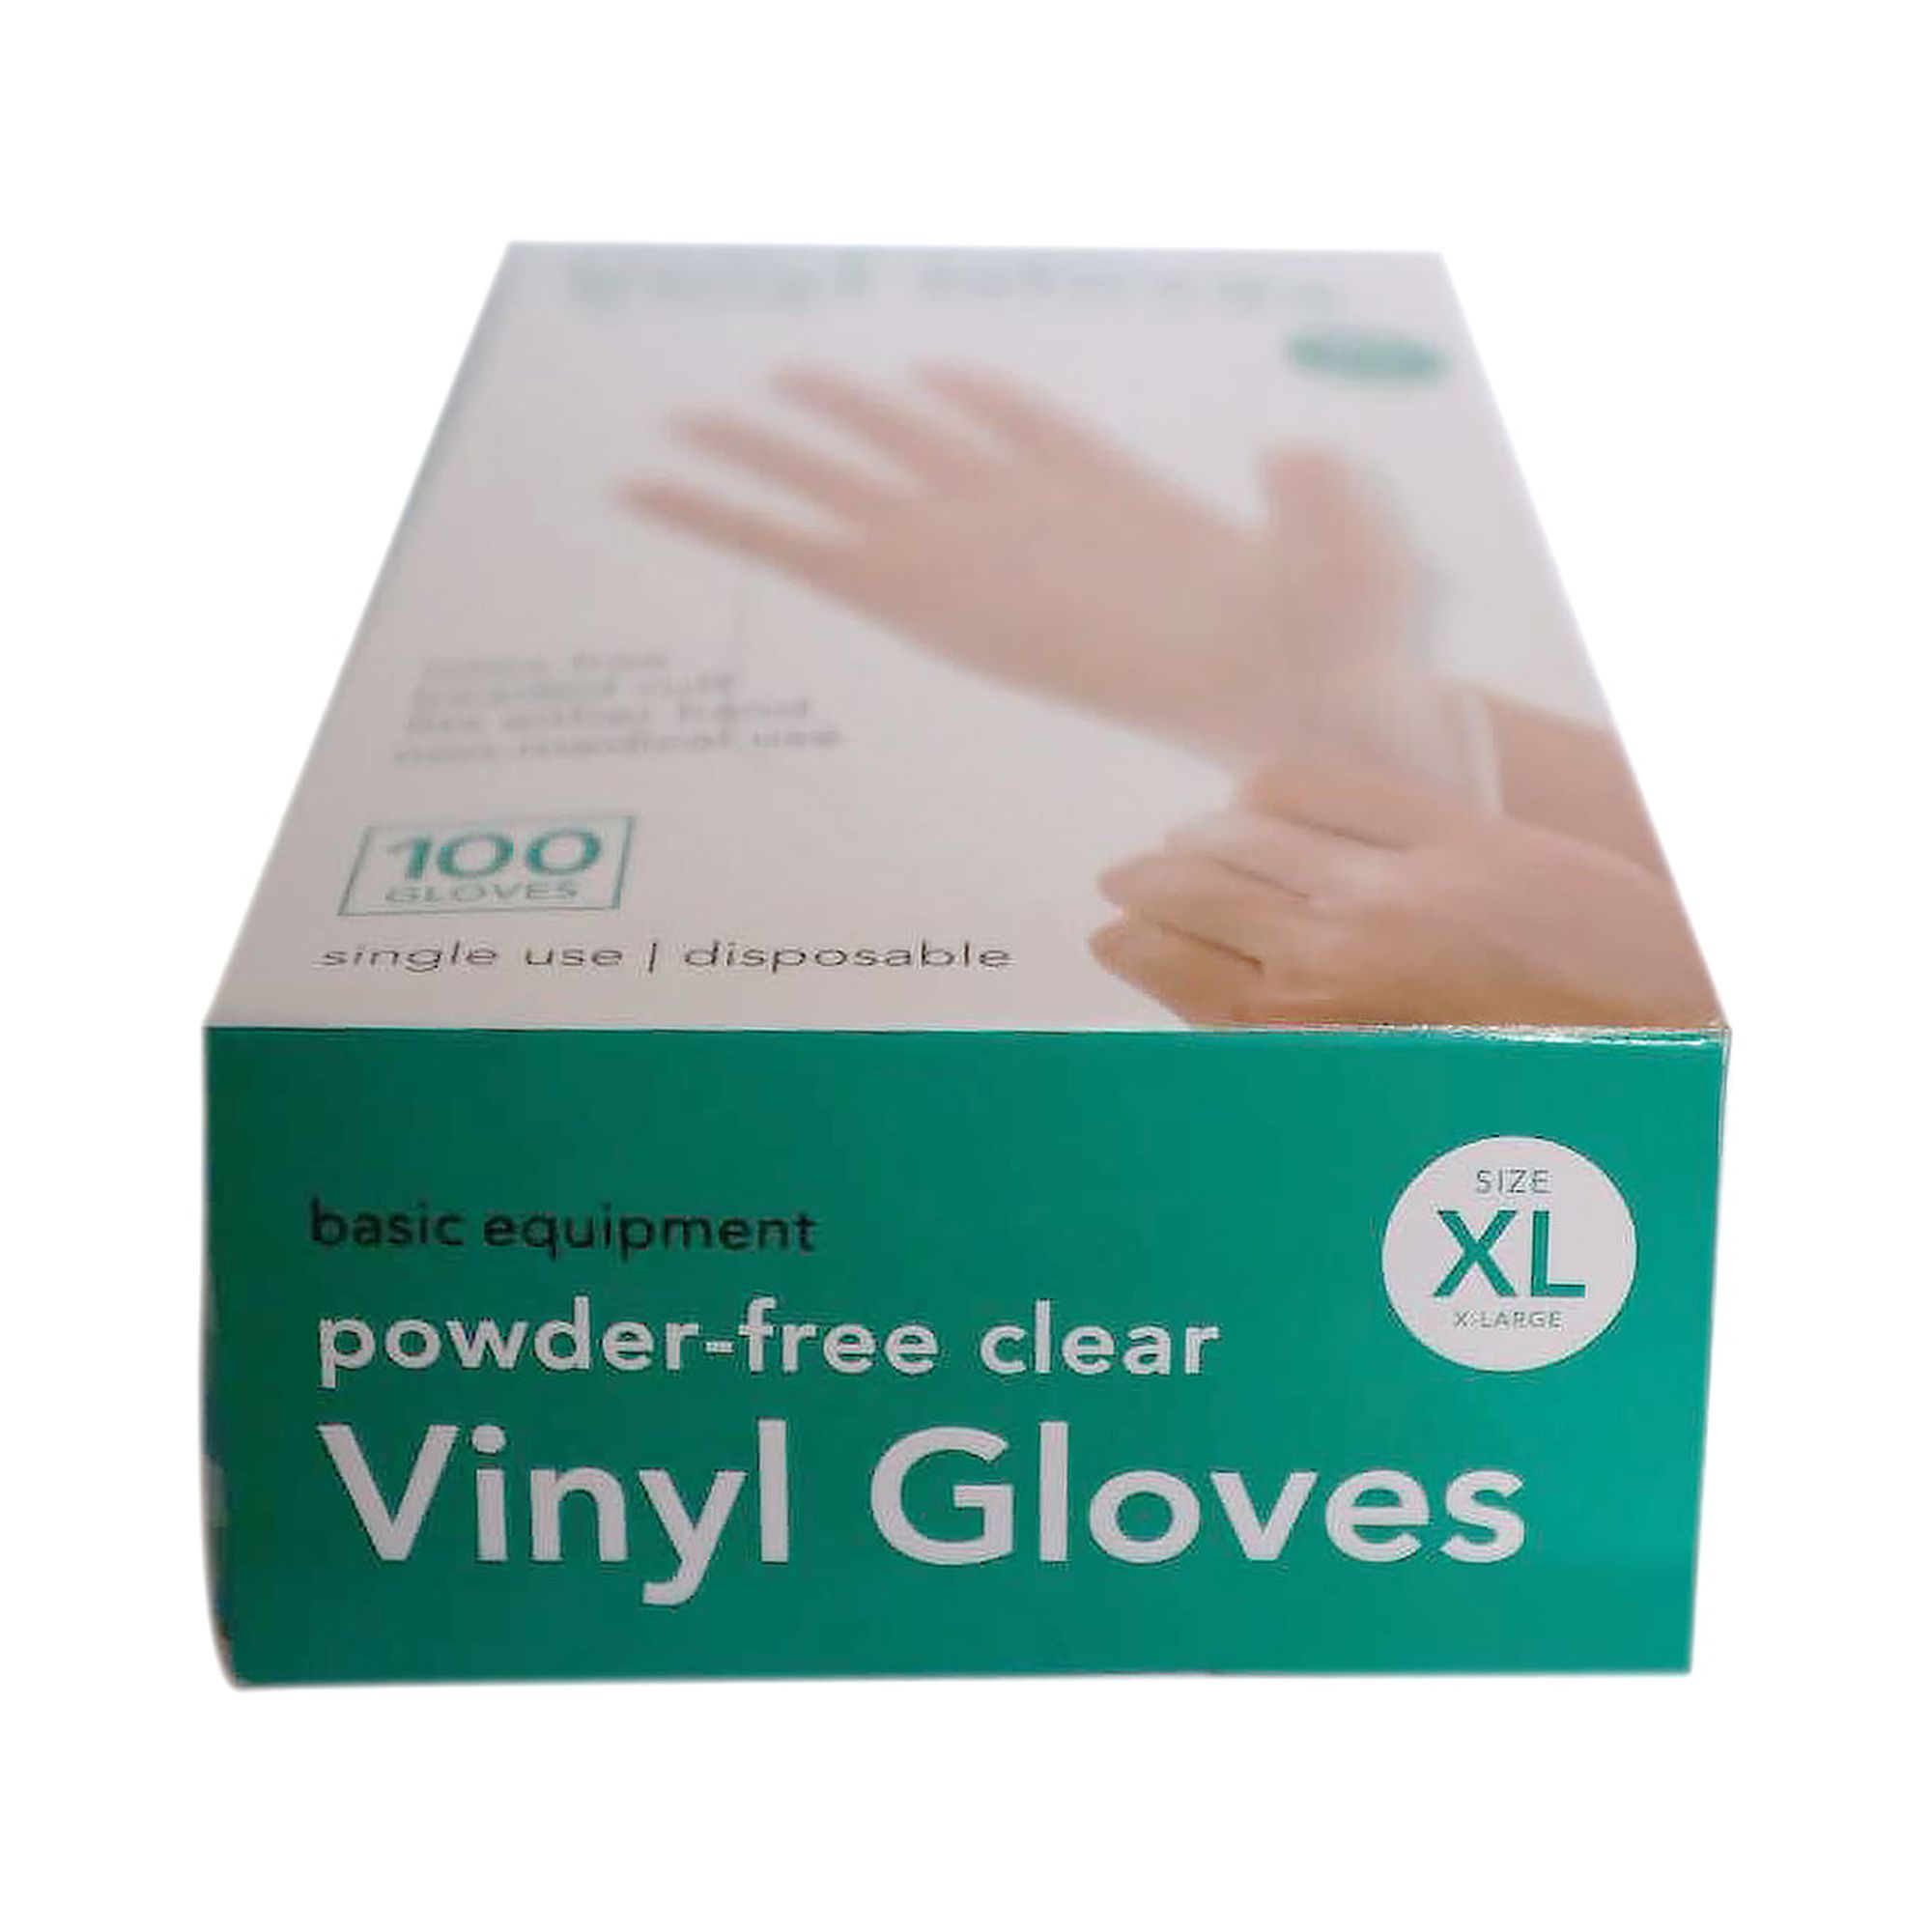 Basic Equipment XL Vinyl Disposable Gloves, 100ct. - image 2 of 3